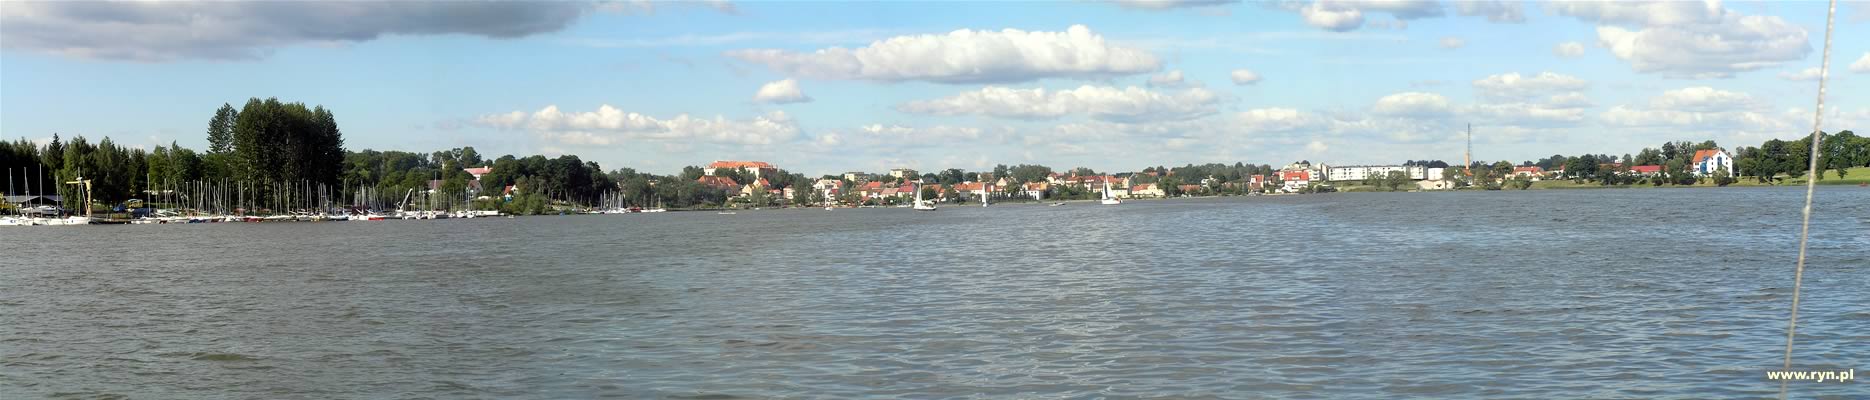 panorama_ryn_jezioro